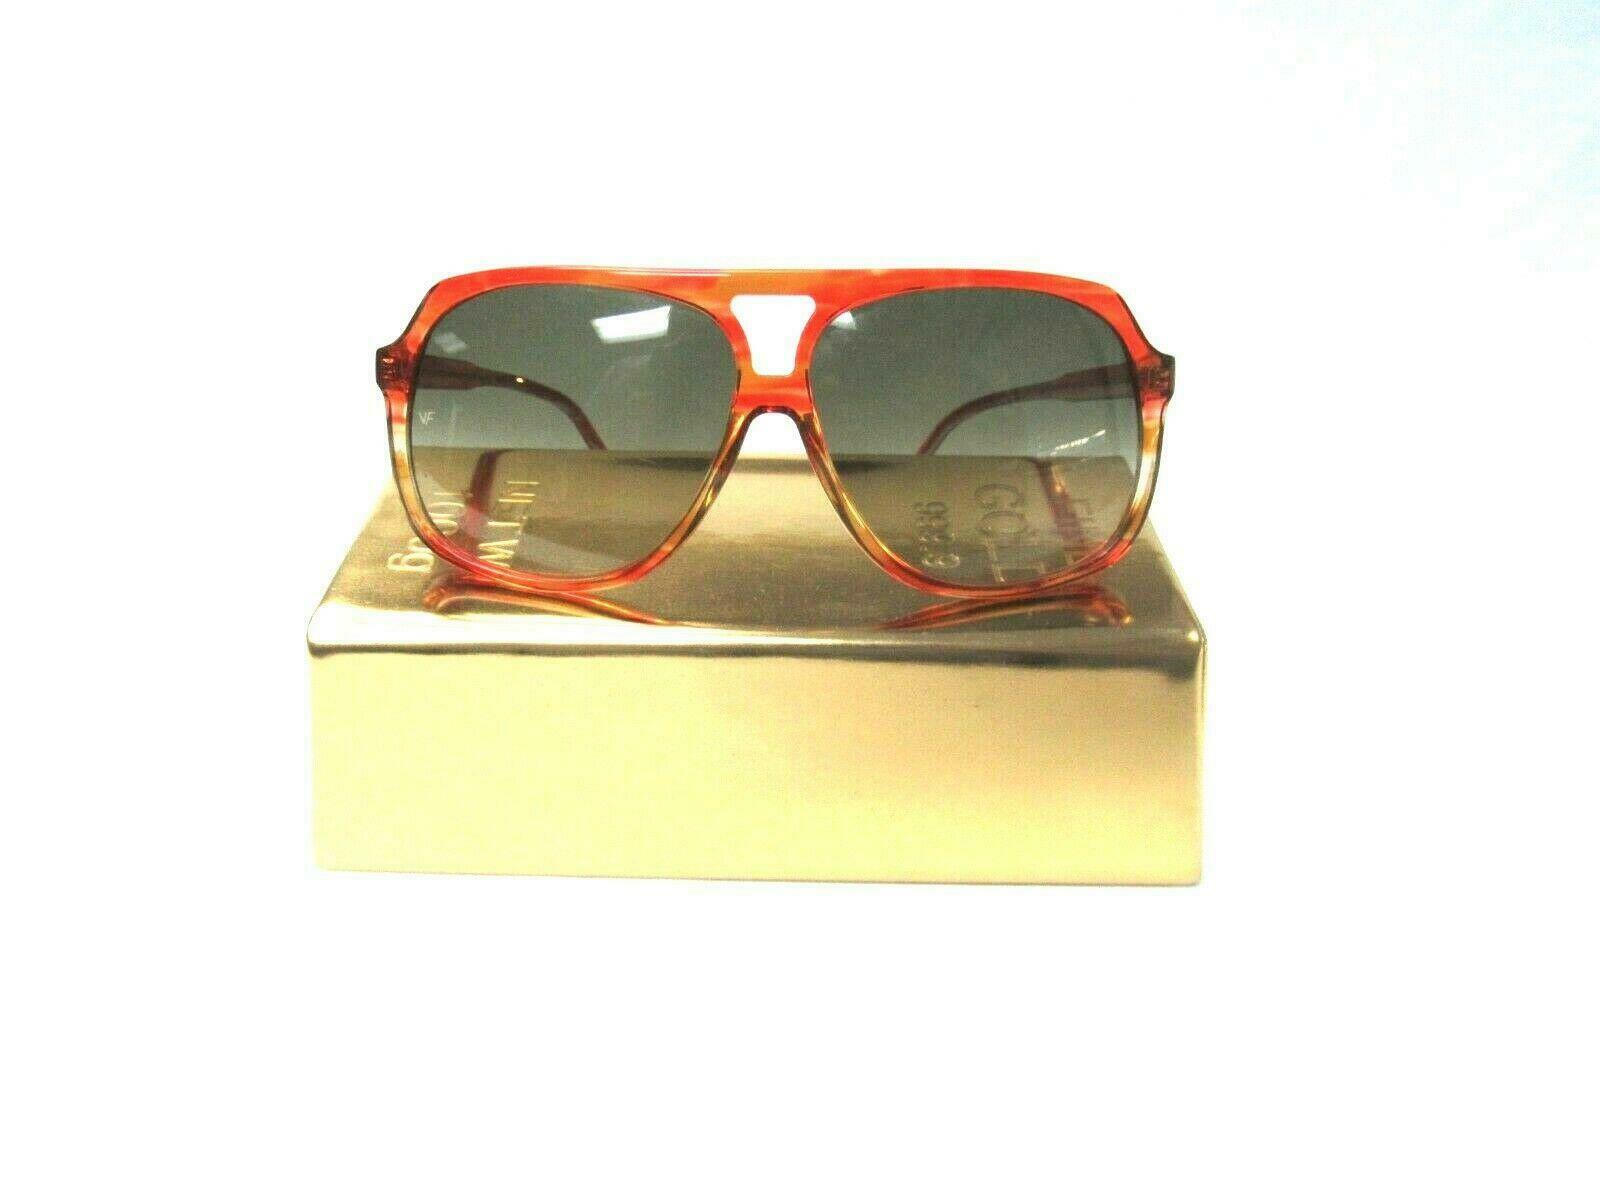 Vintage Frames By Corey Shapiro Women's Fashion Sunglasses Cherry Red - image 2 of 6